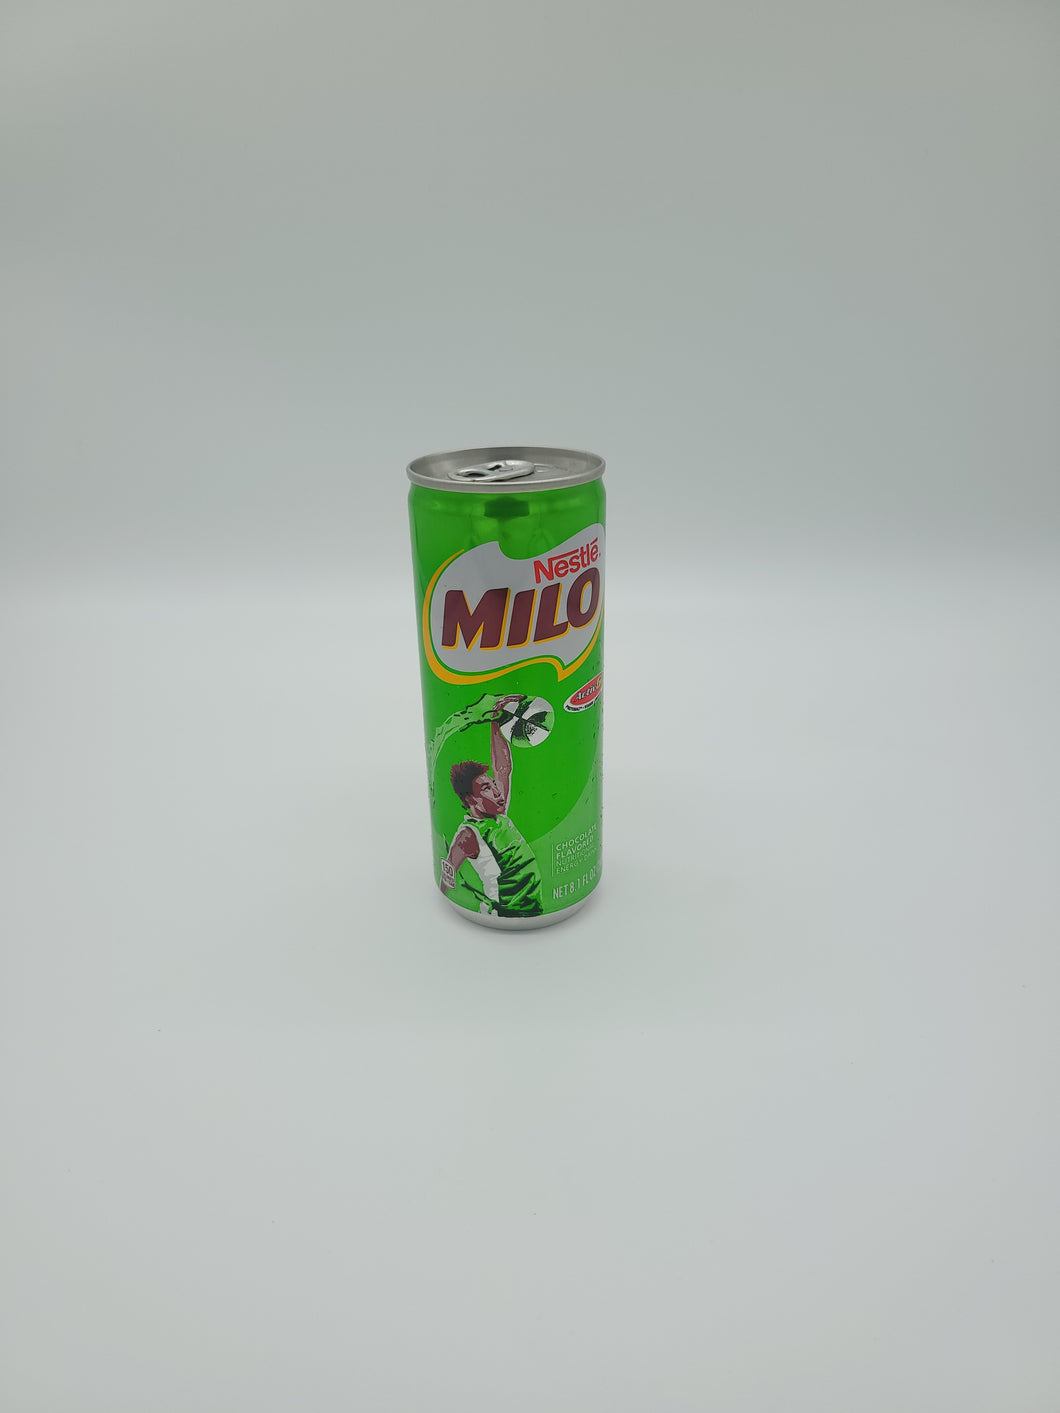 Nestle Milo Chocolate Drink